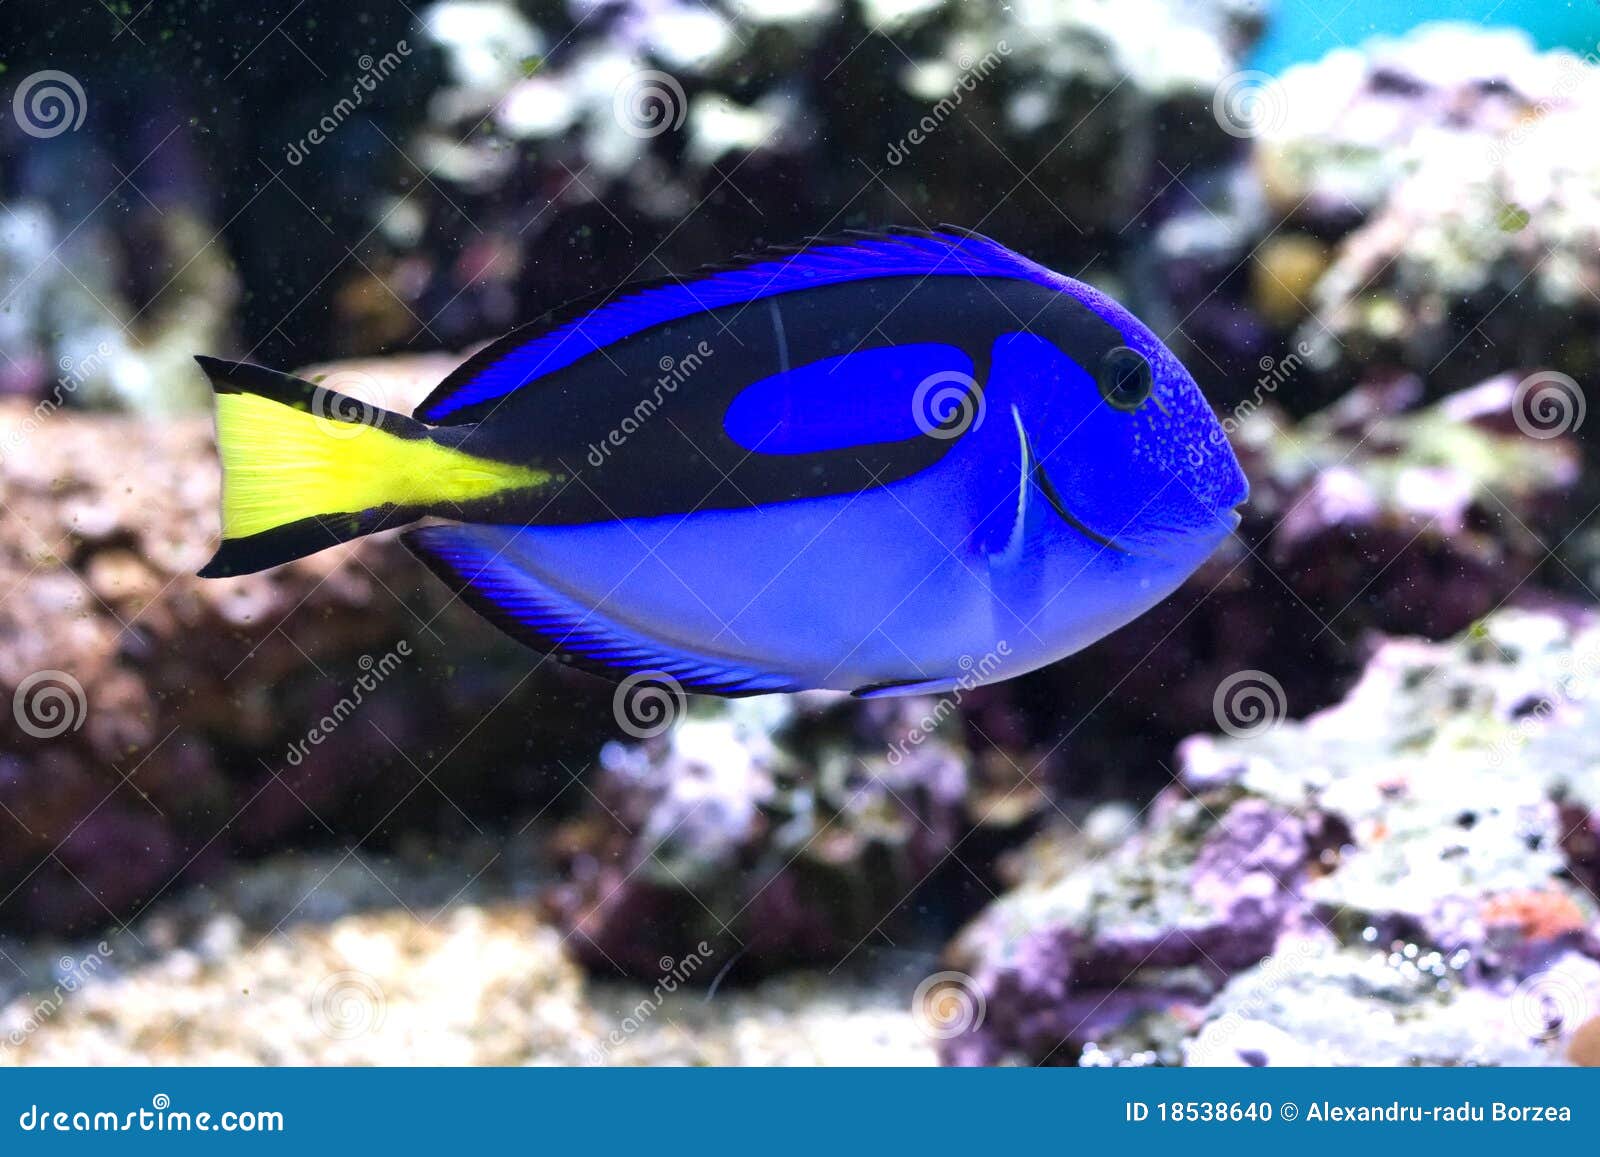 palette surgeonfish